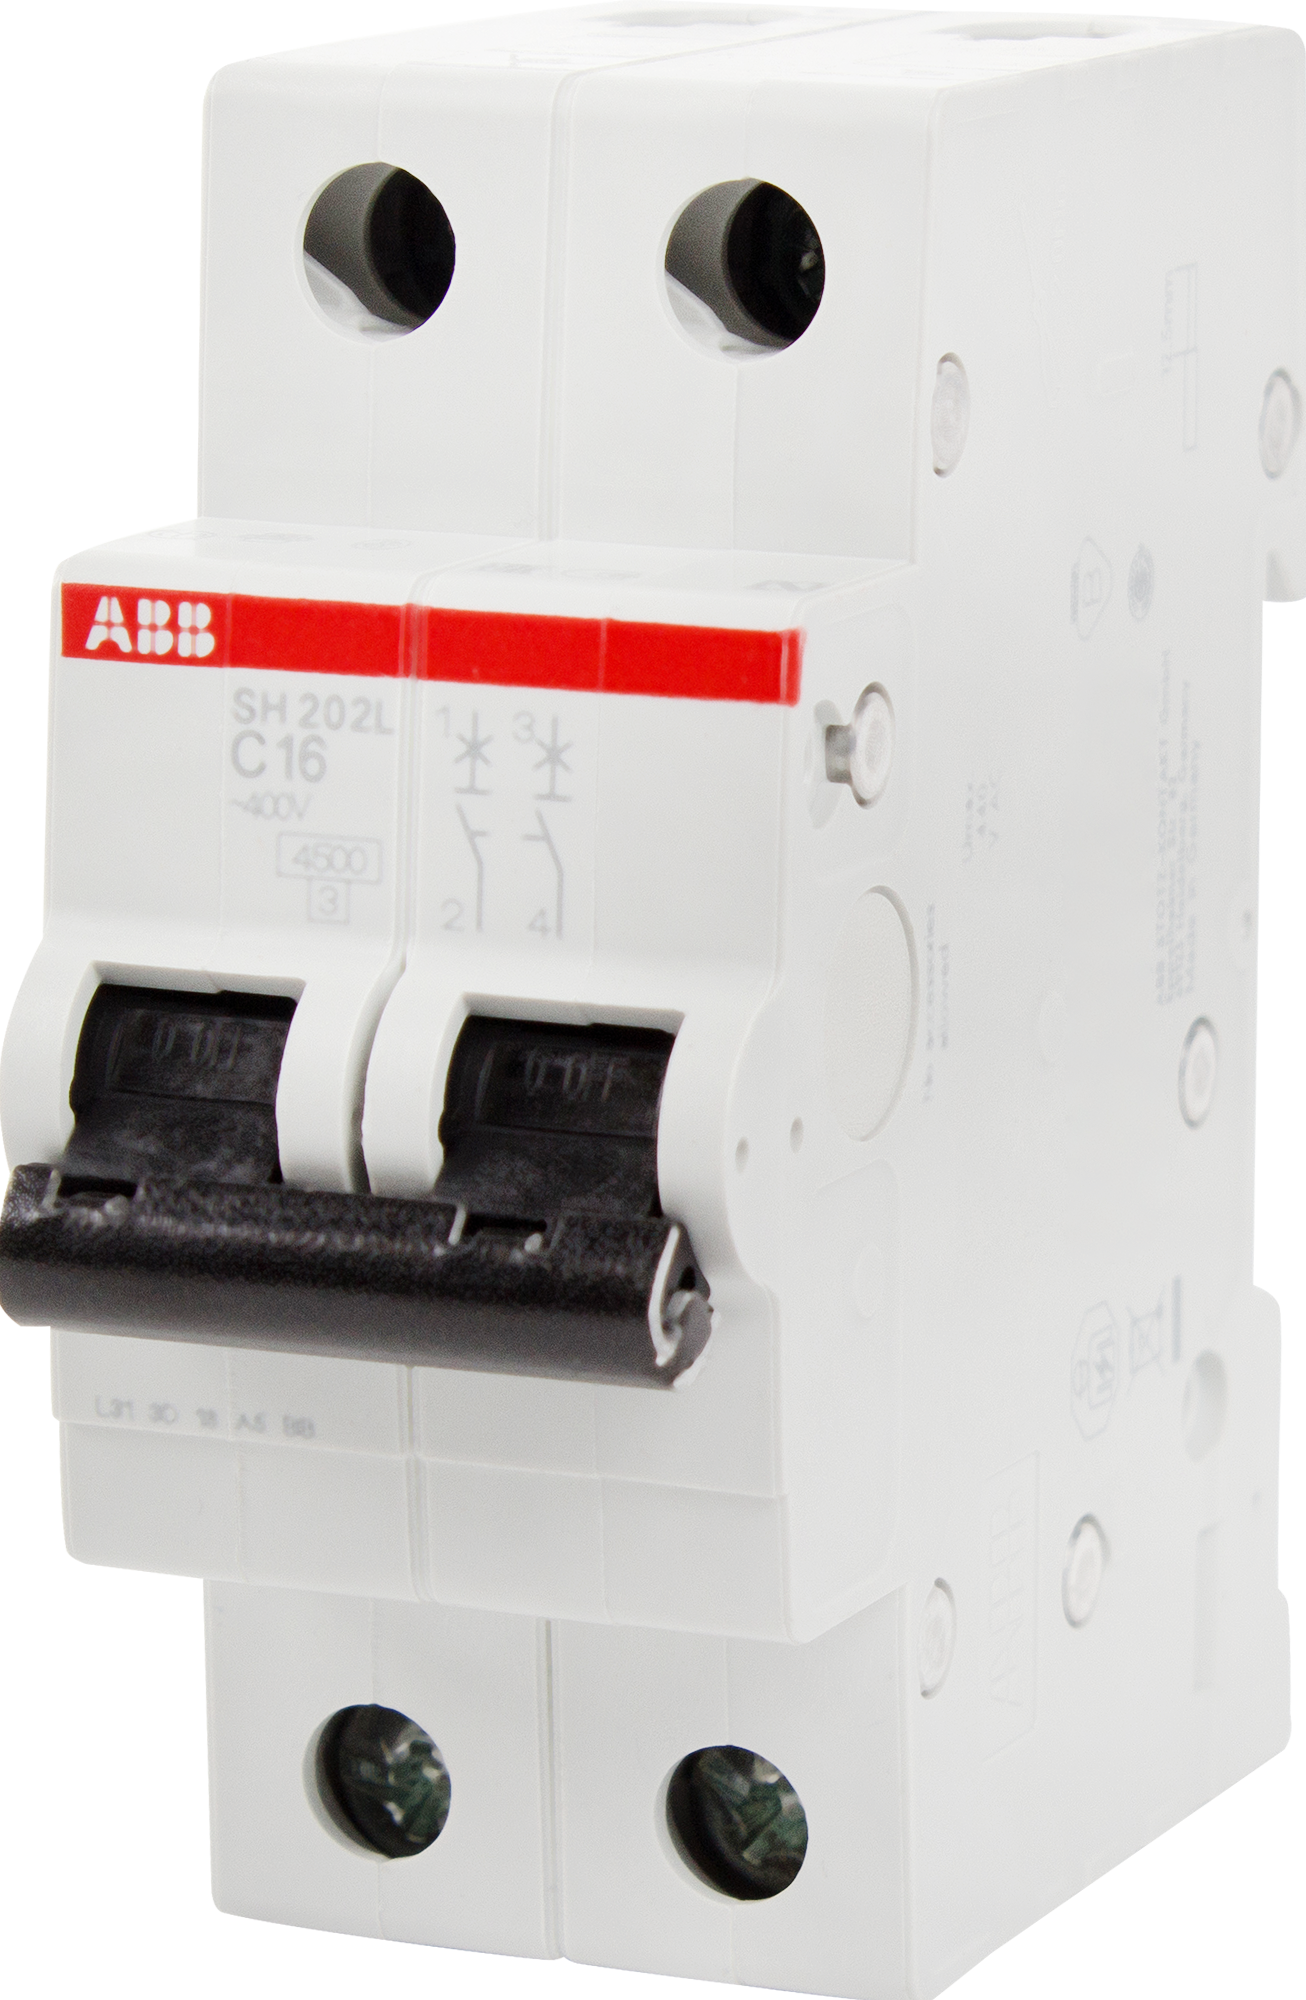 Abb автоматические выключатели 25а. Автоматический выключатель ABB s202. Автоматический модульный выключатель ABB 2п c sh202l 4.5ка 50а. ABB sh202l c32. Автомат ABB sh202l 2p 10а.